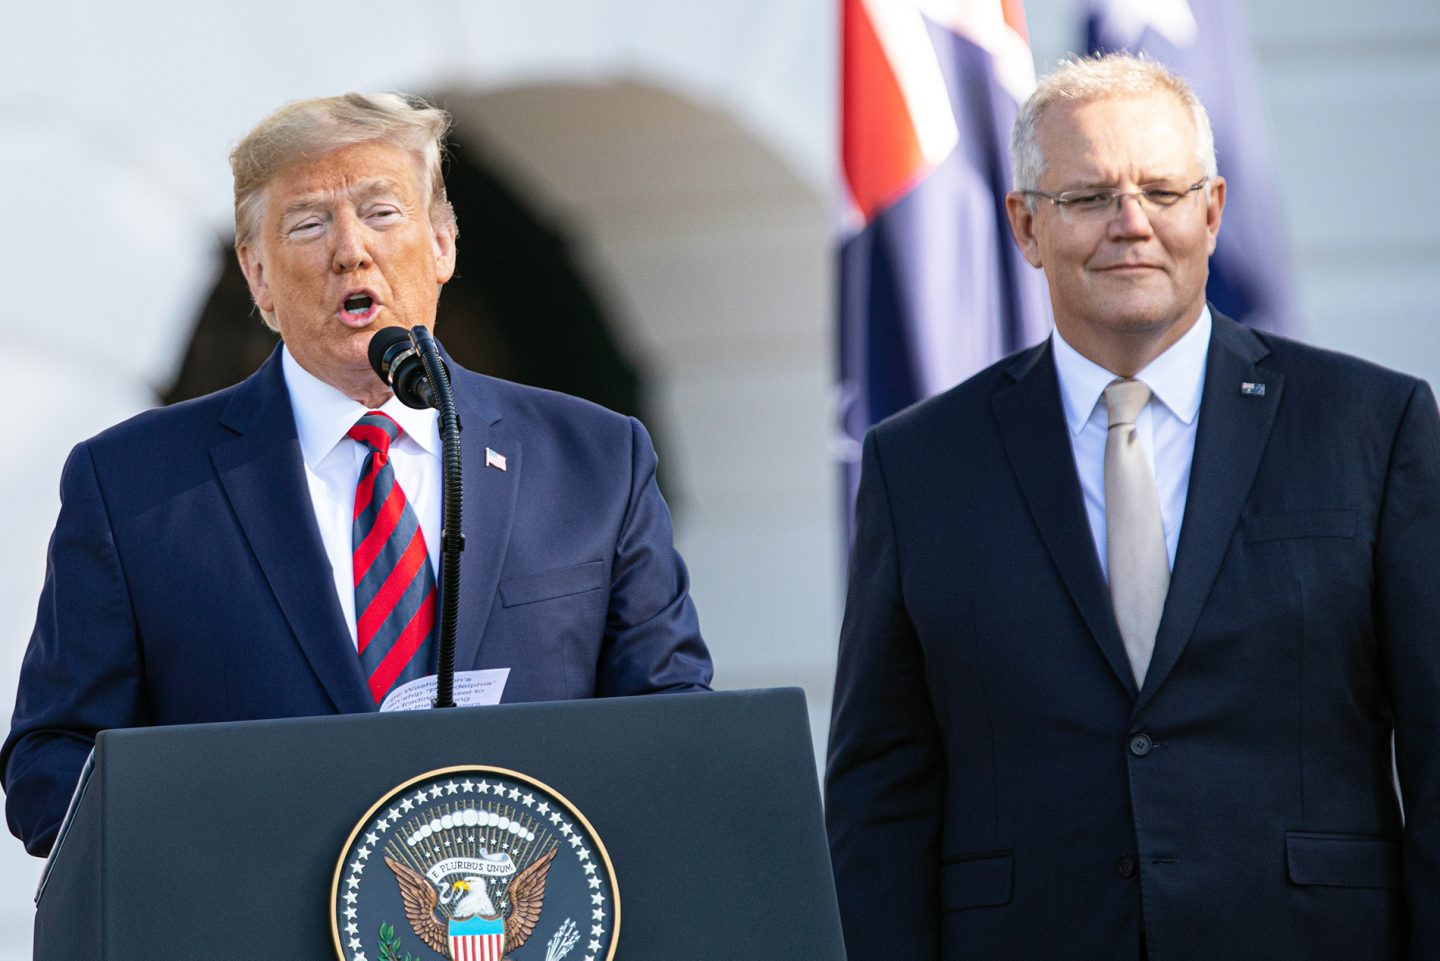 Donald Trump and Scott Morrison in Washington, September 2019